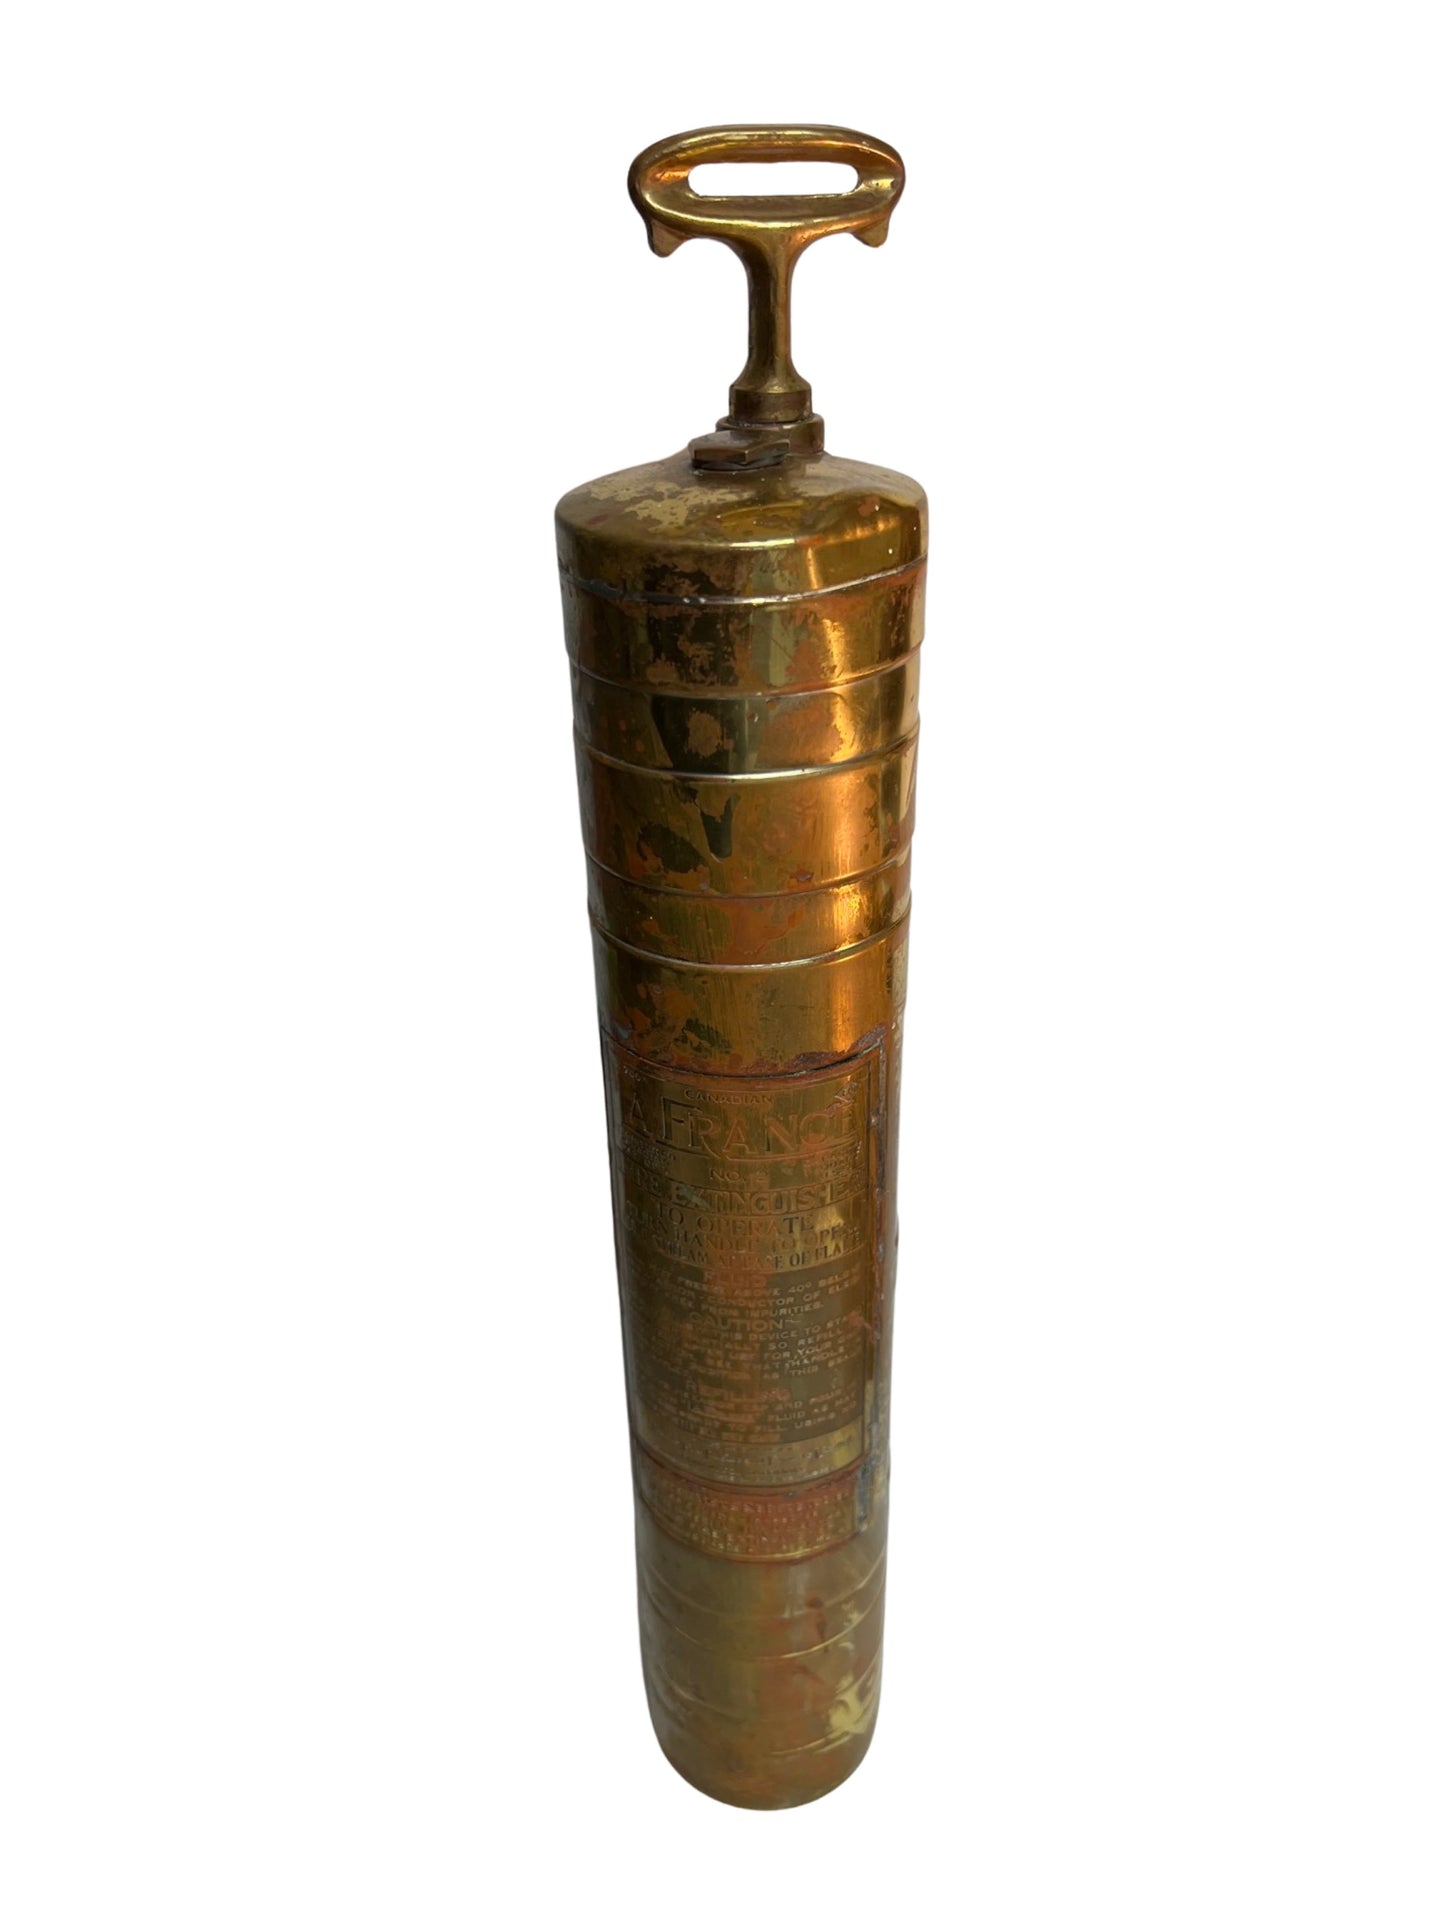 Vintage LaFrance brass fire extinguisher